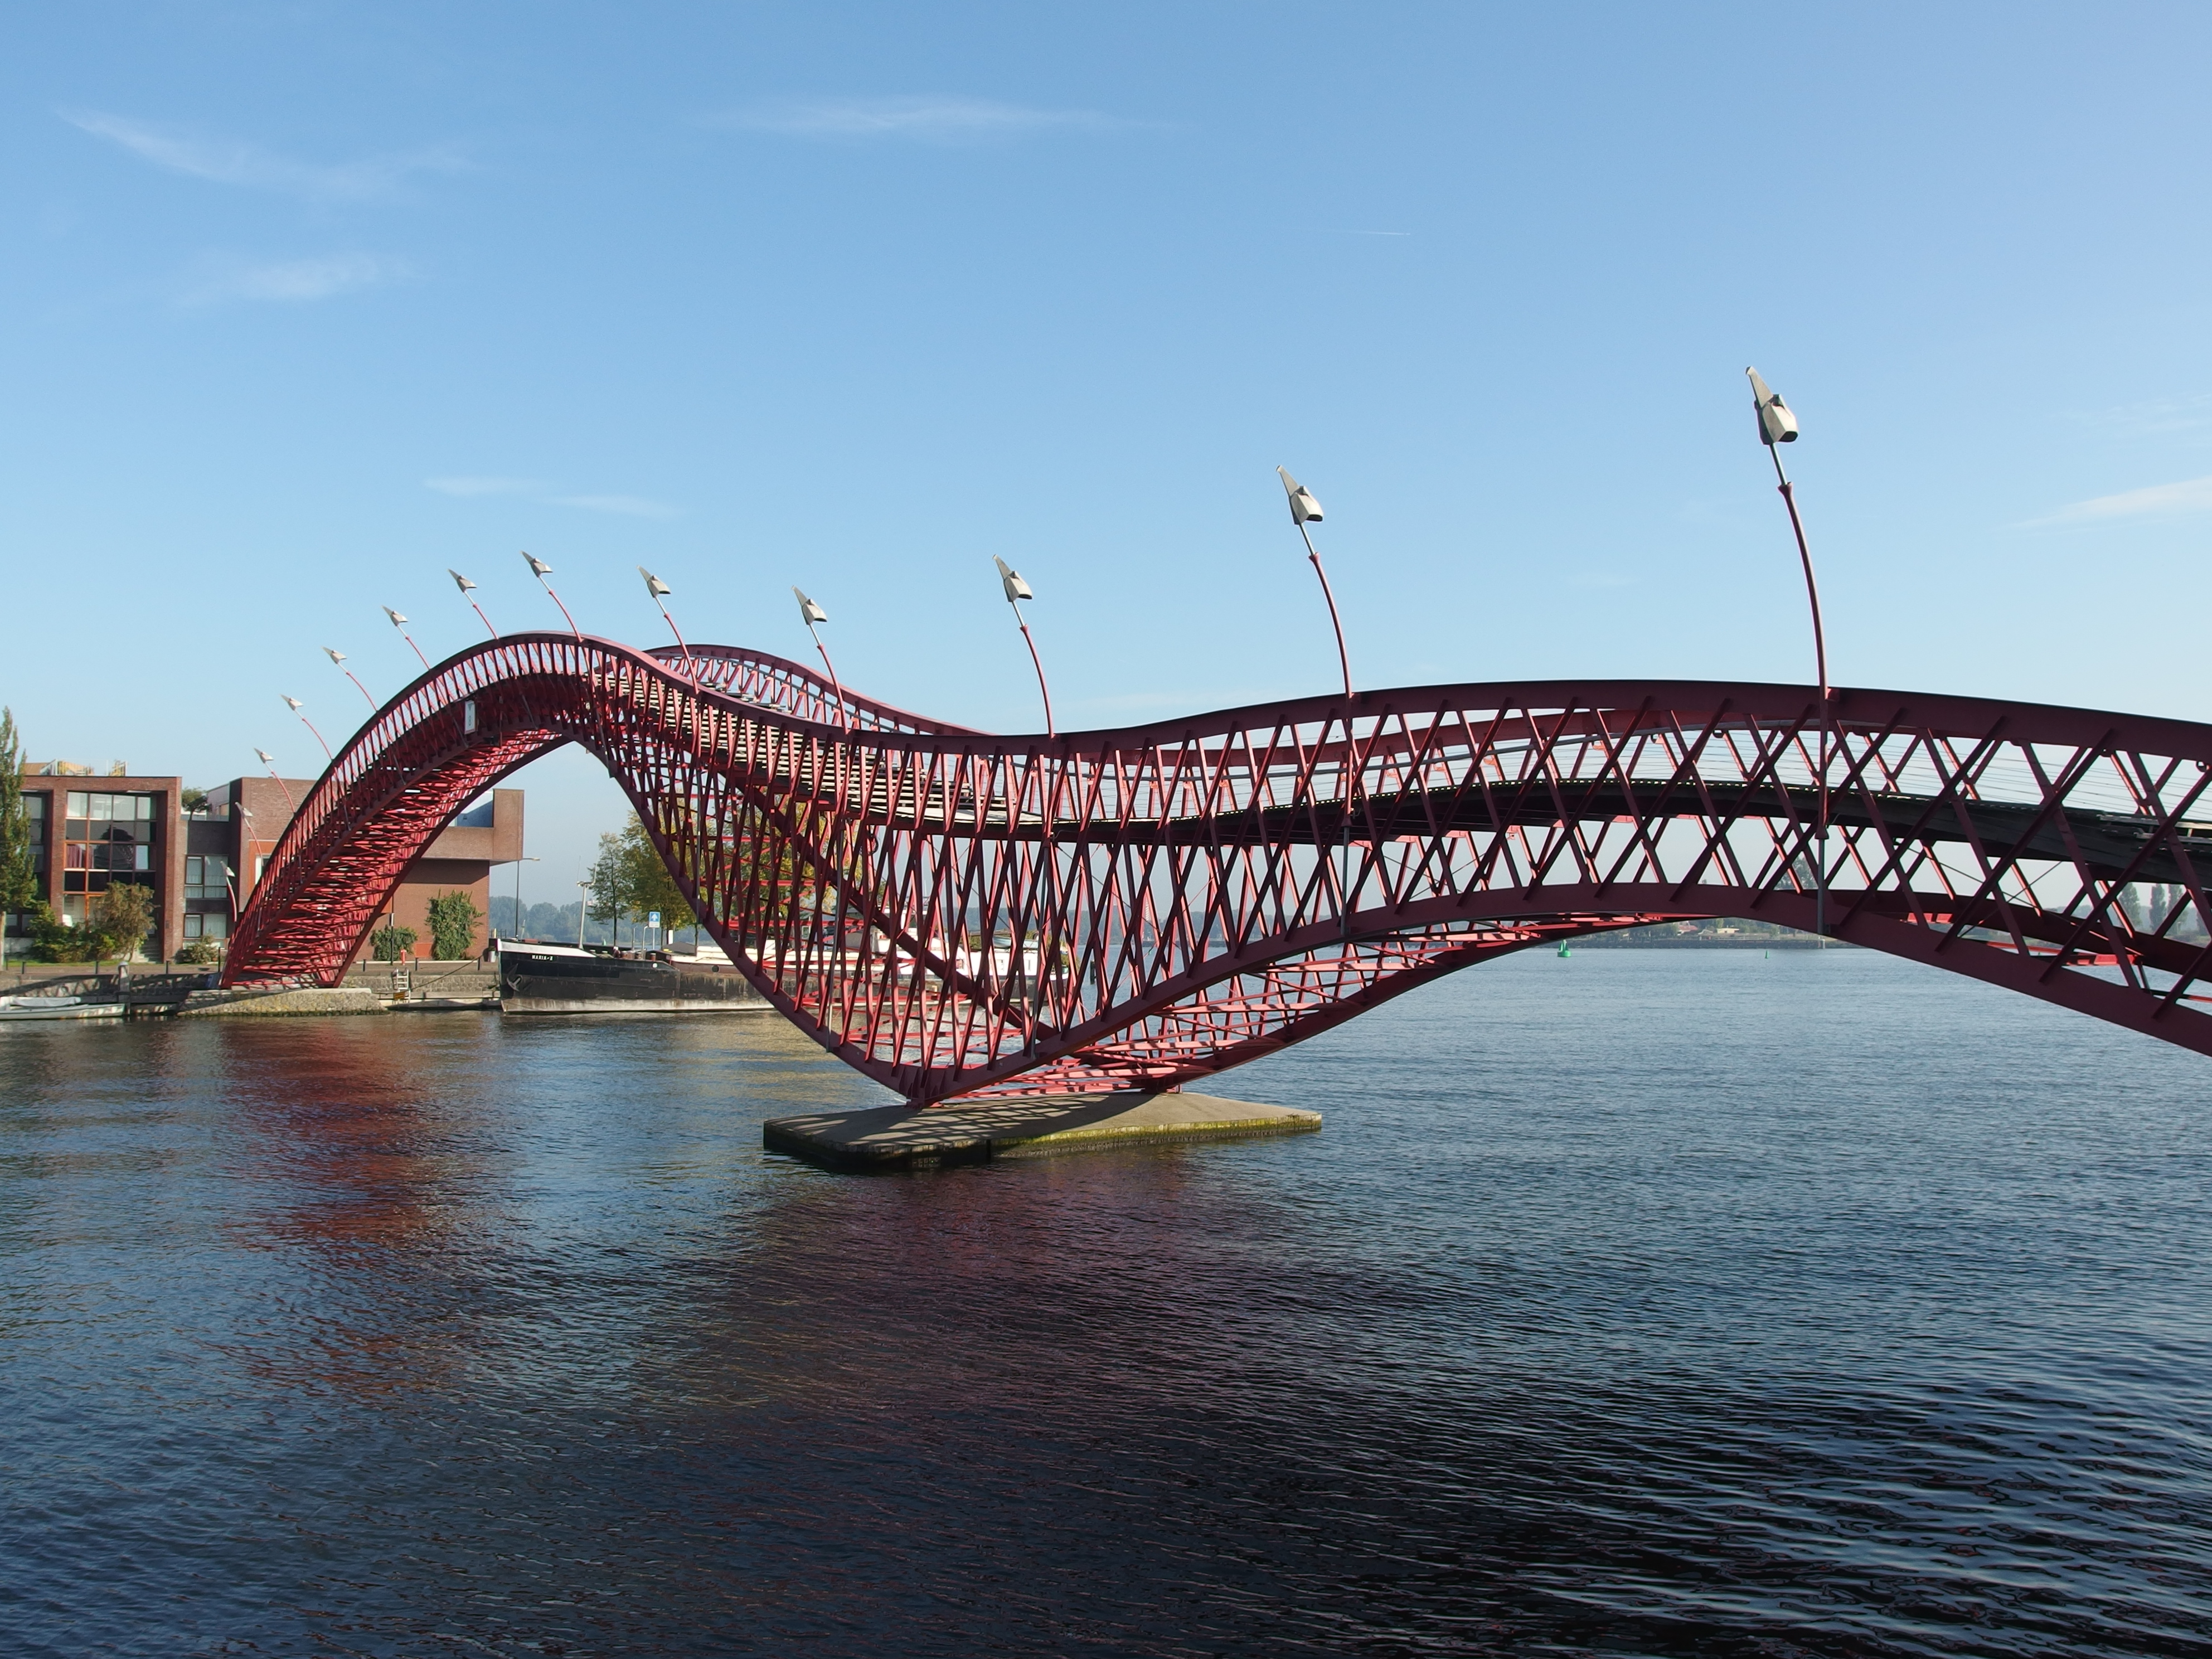 File:Red bridge (21953792562).jpg - Wikimedia Commons